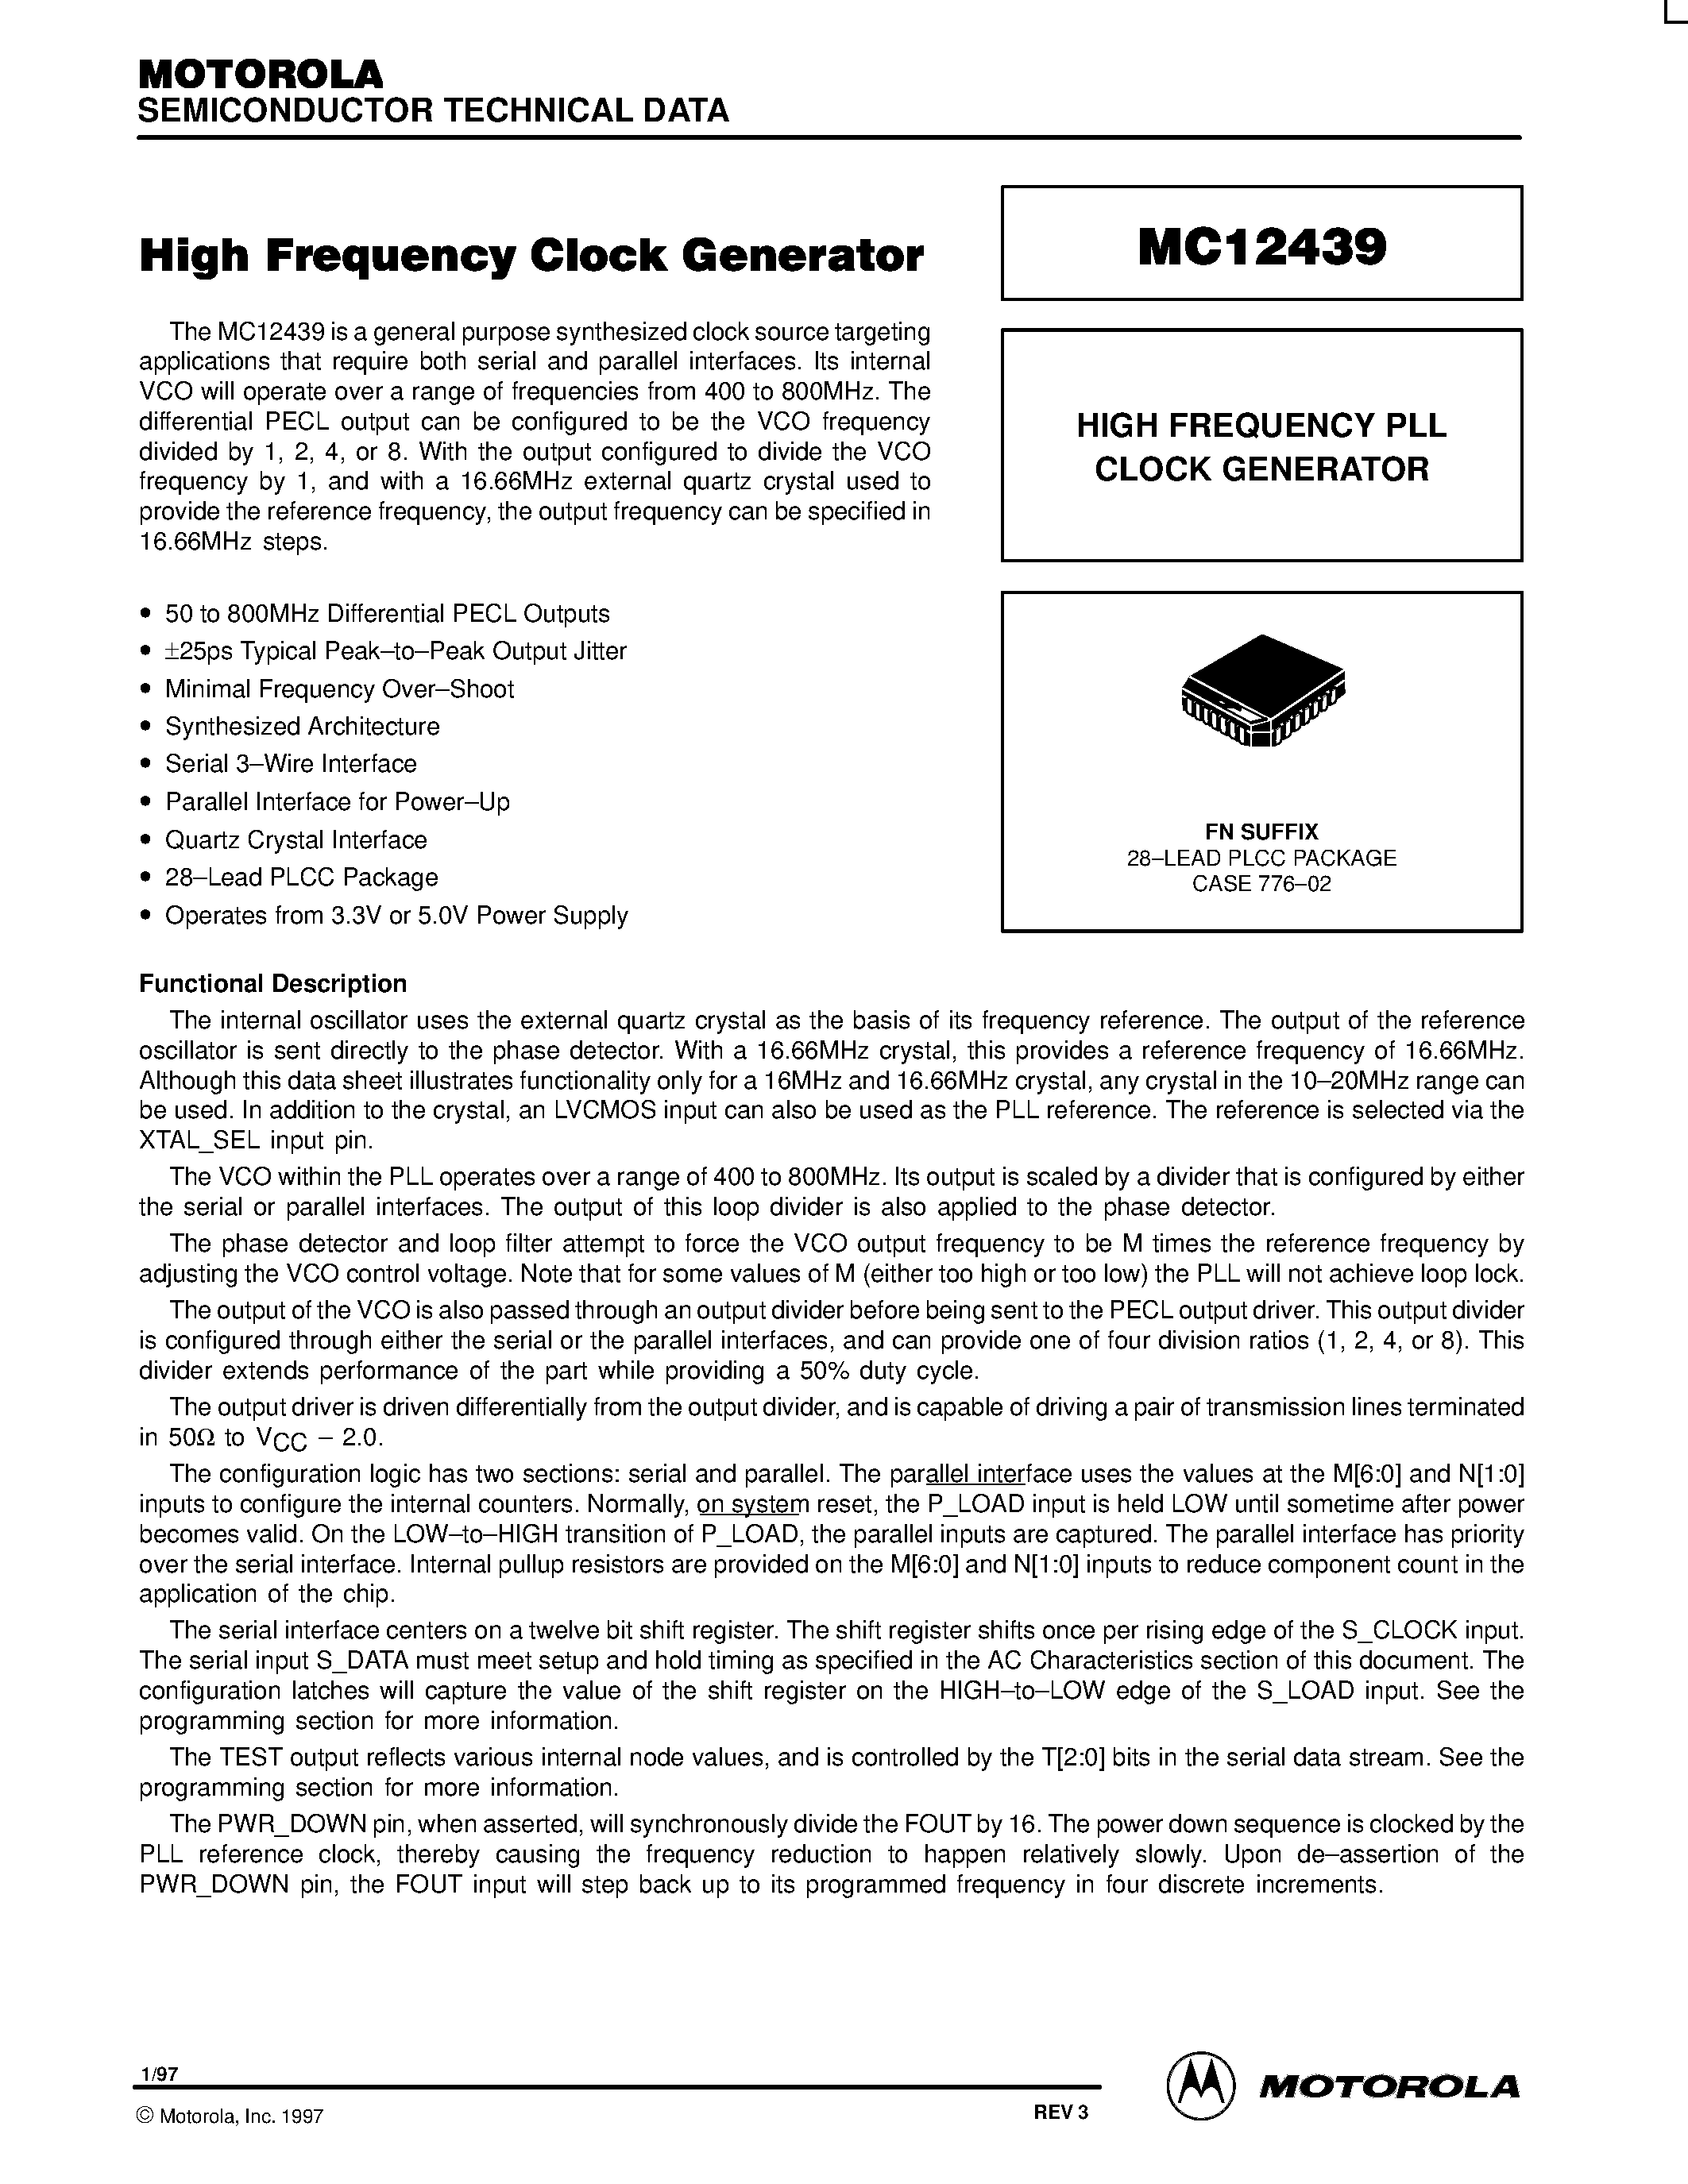 Datasheet MC12439FN - HIGH FREQUENCY PLL CLOCK GENERATOR page 1